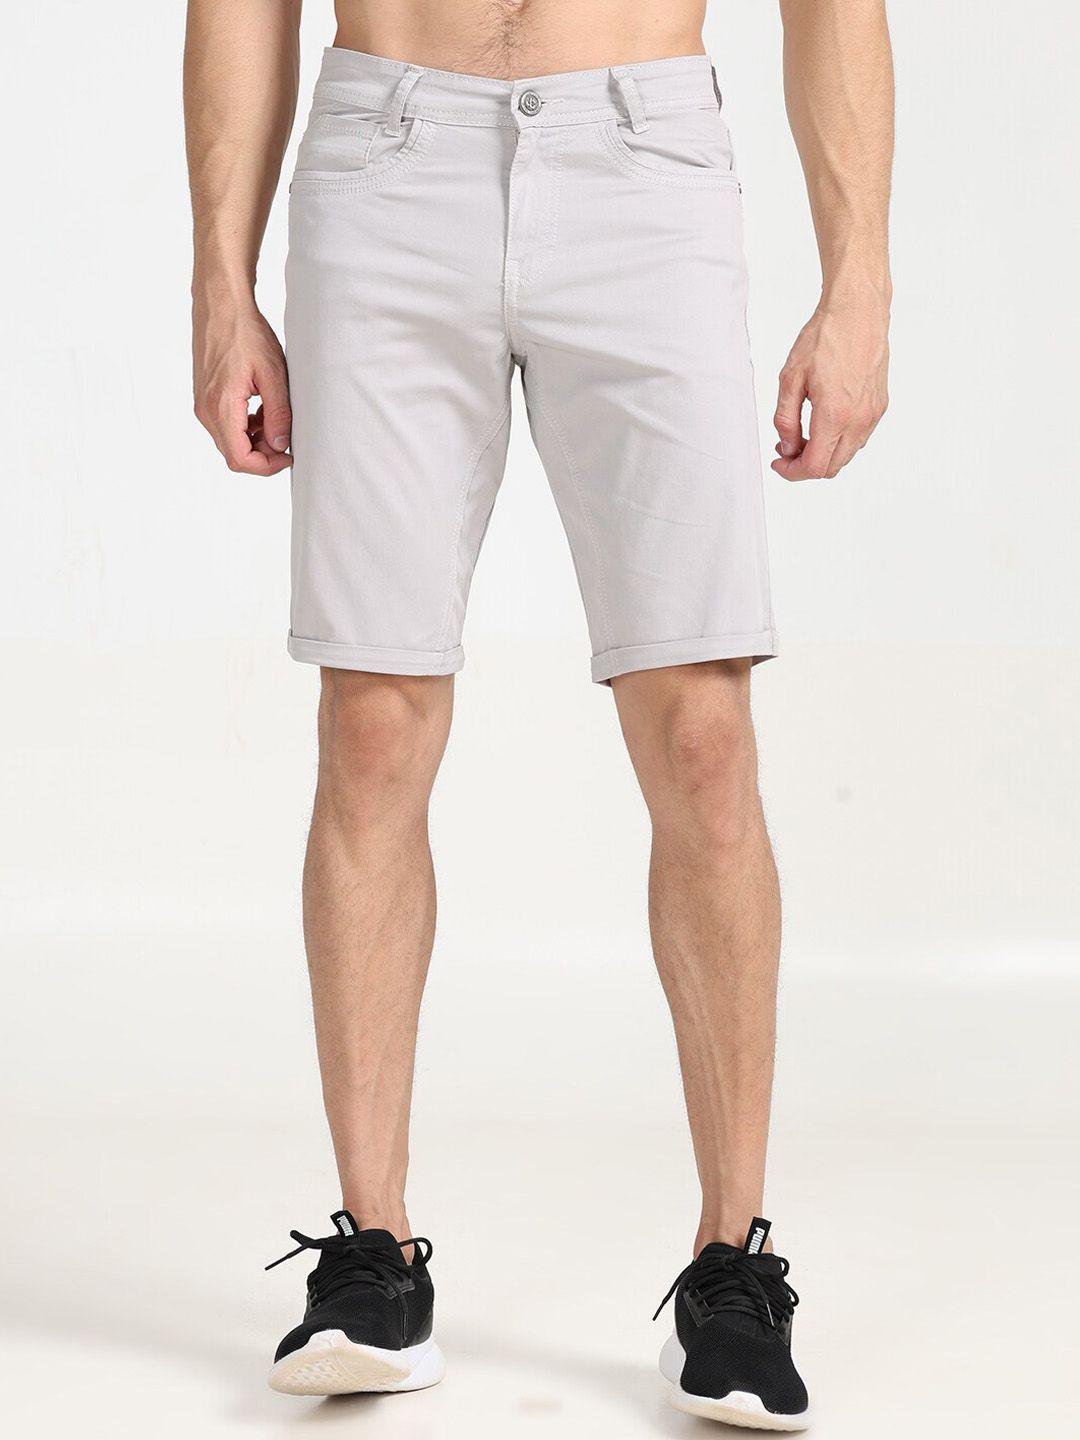 jean cafe men silver-toned slim fit shorts